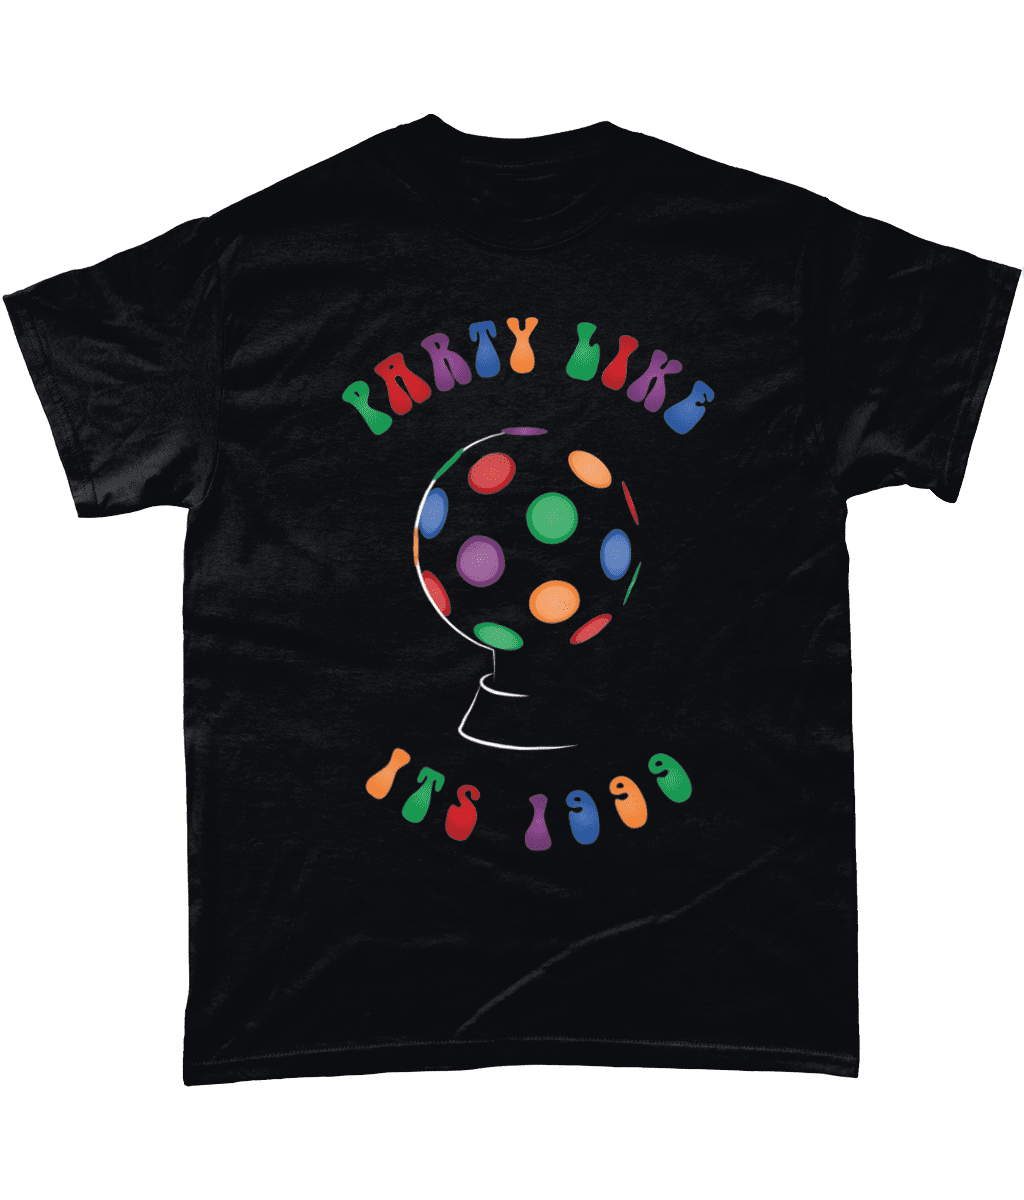 Party Like its 1999 Disco Ball T-Shirt Black